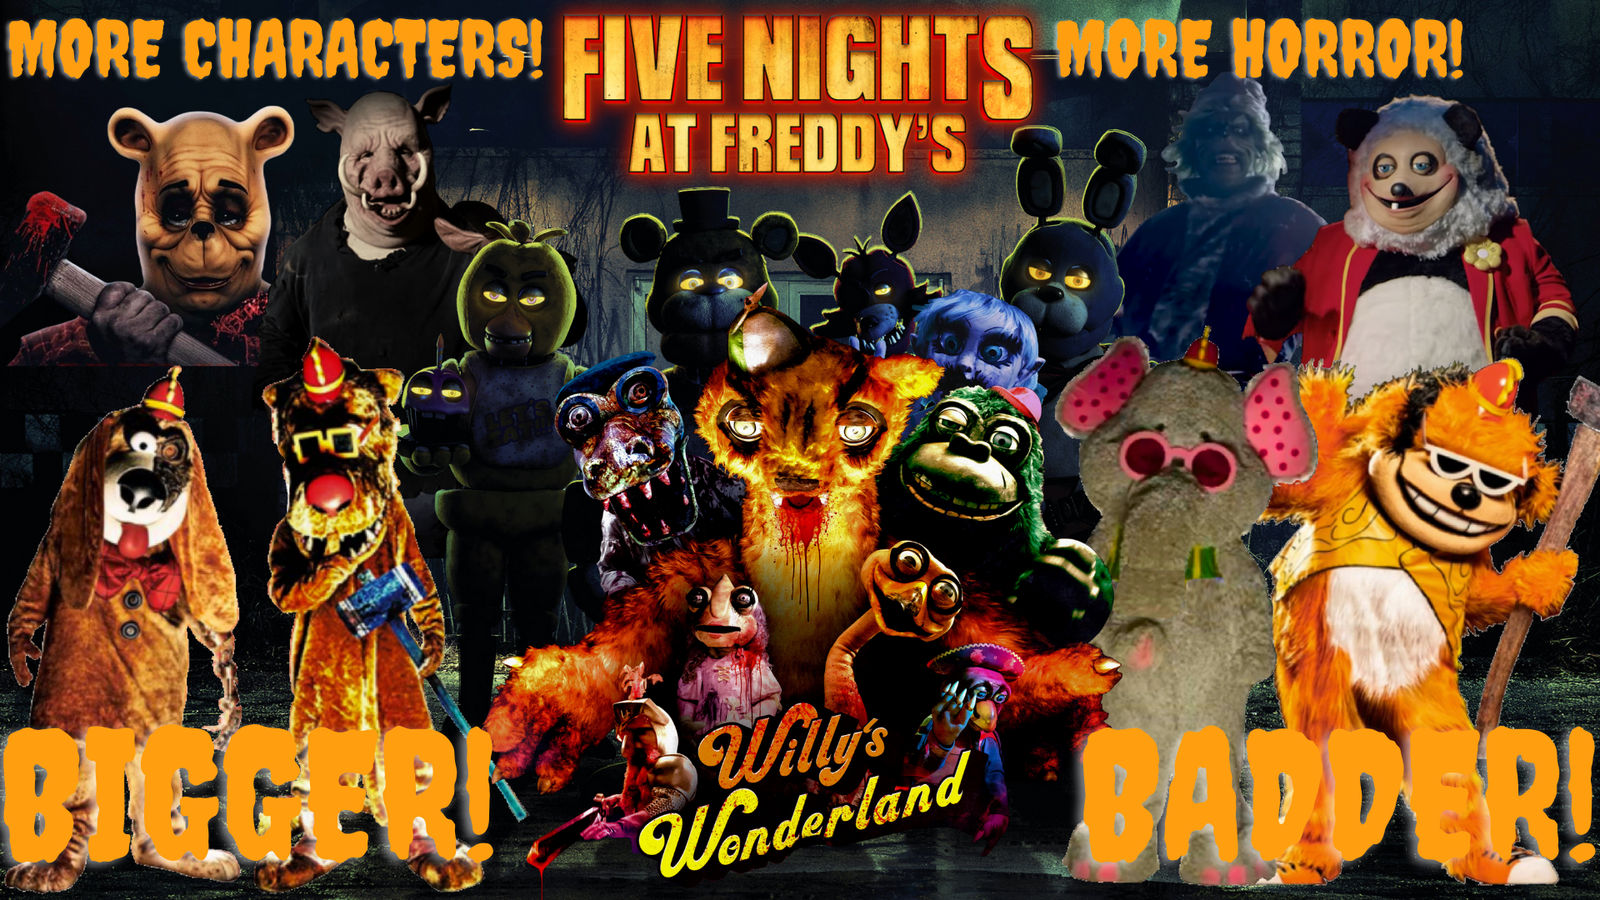 Five Nights at Freddy's - MoviePooper